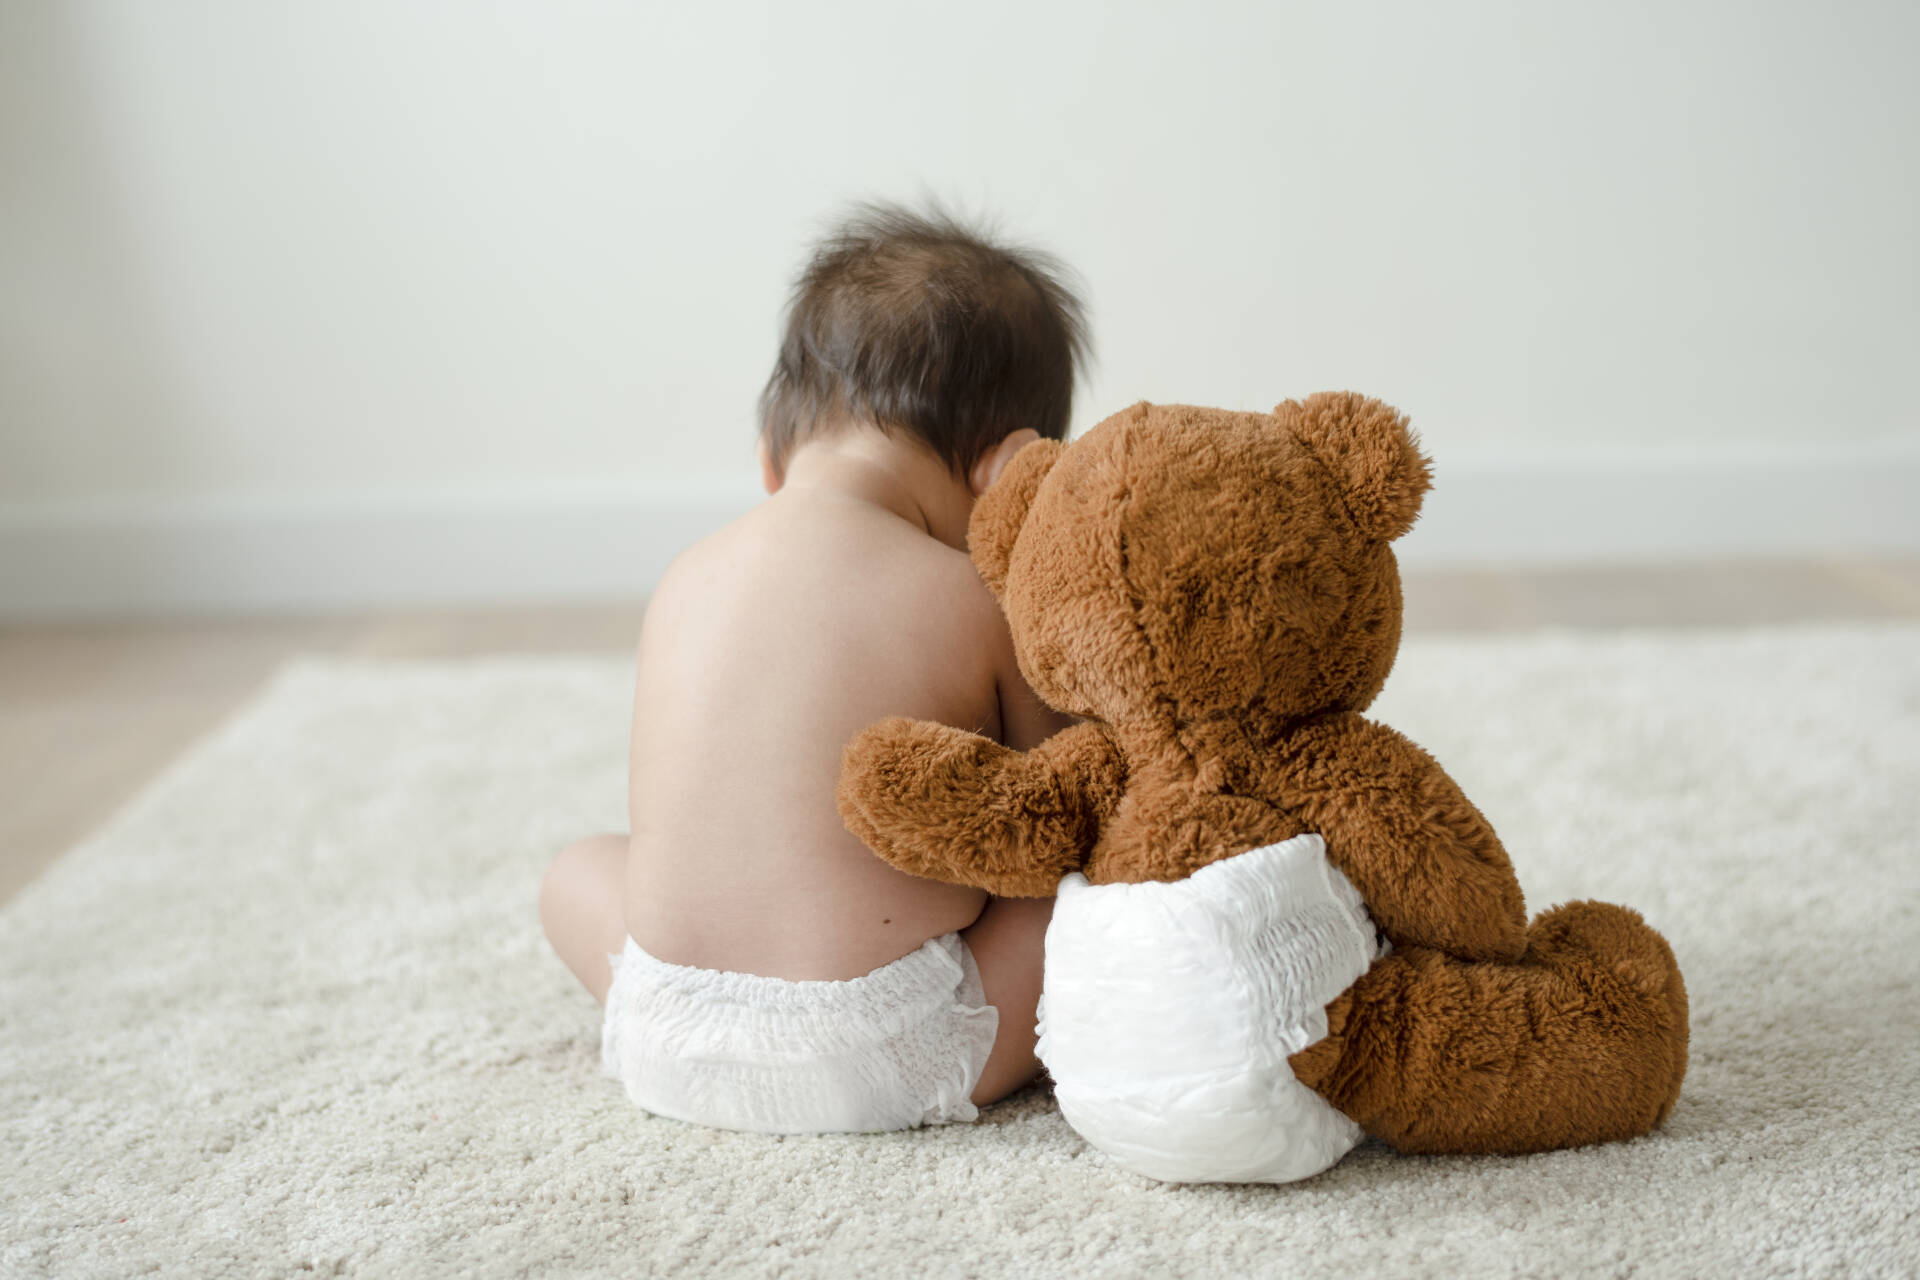 A baby sits beside a teddy bear on a carpet. The teddy bear's arm is on the child's back